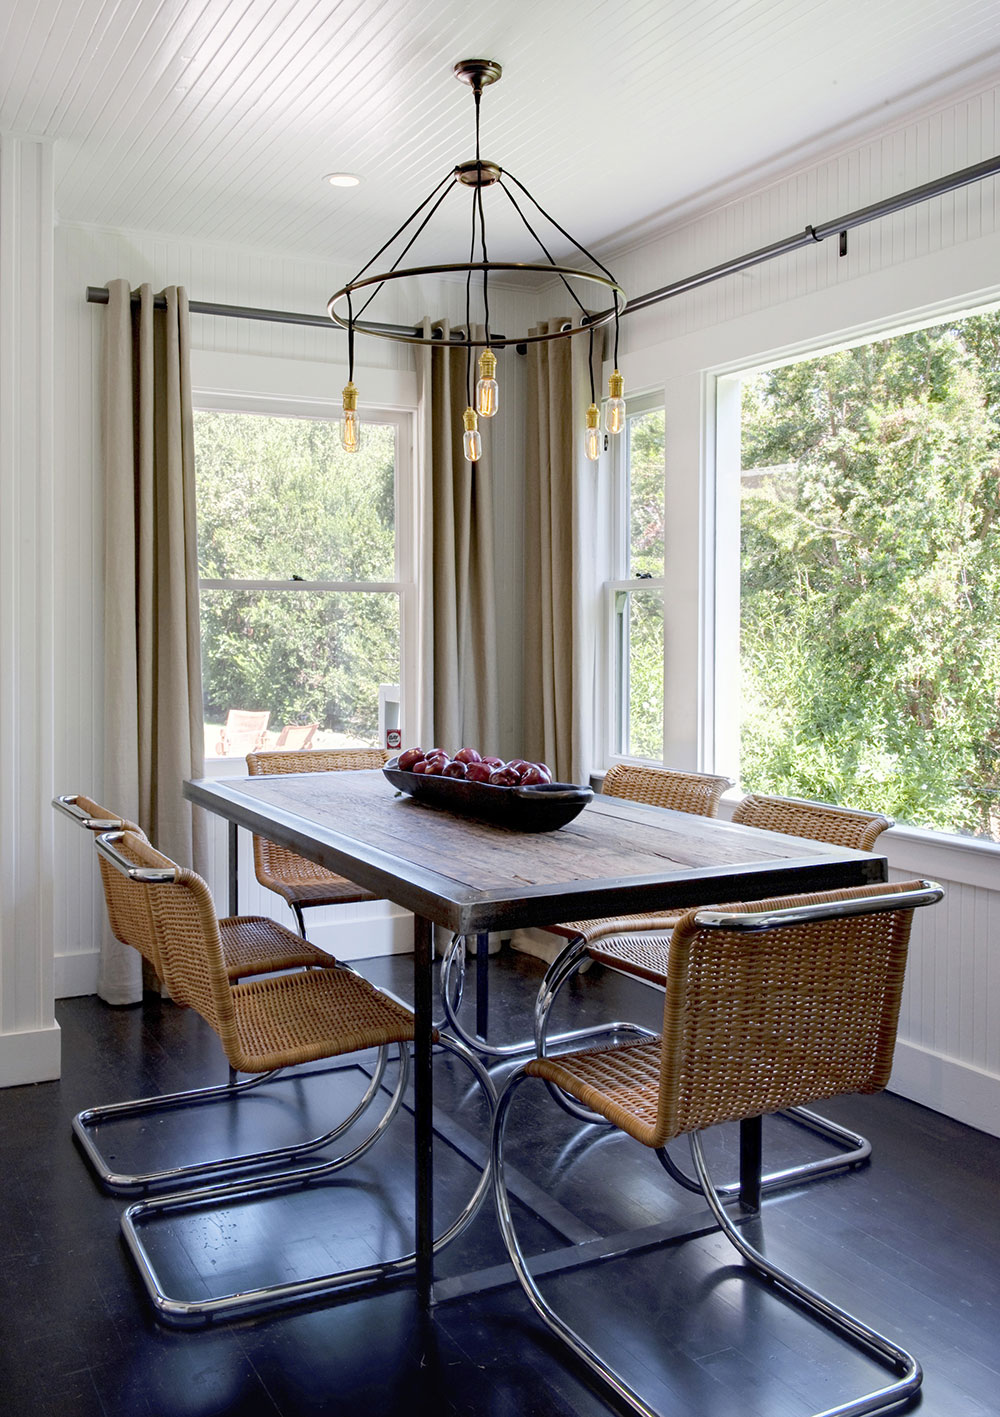 Mies-Van-der-Rohe-dining-chairs-Sonoma-Residence-Antonio-Martins-Interior-Design